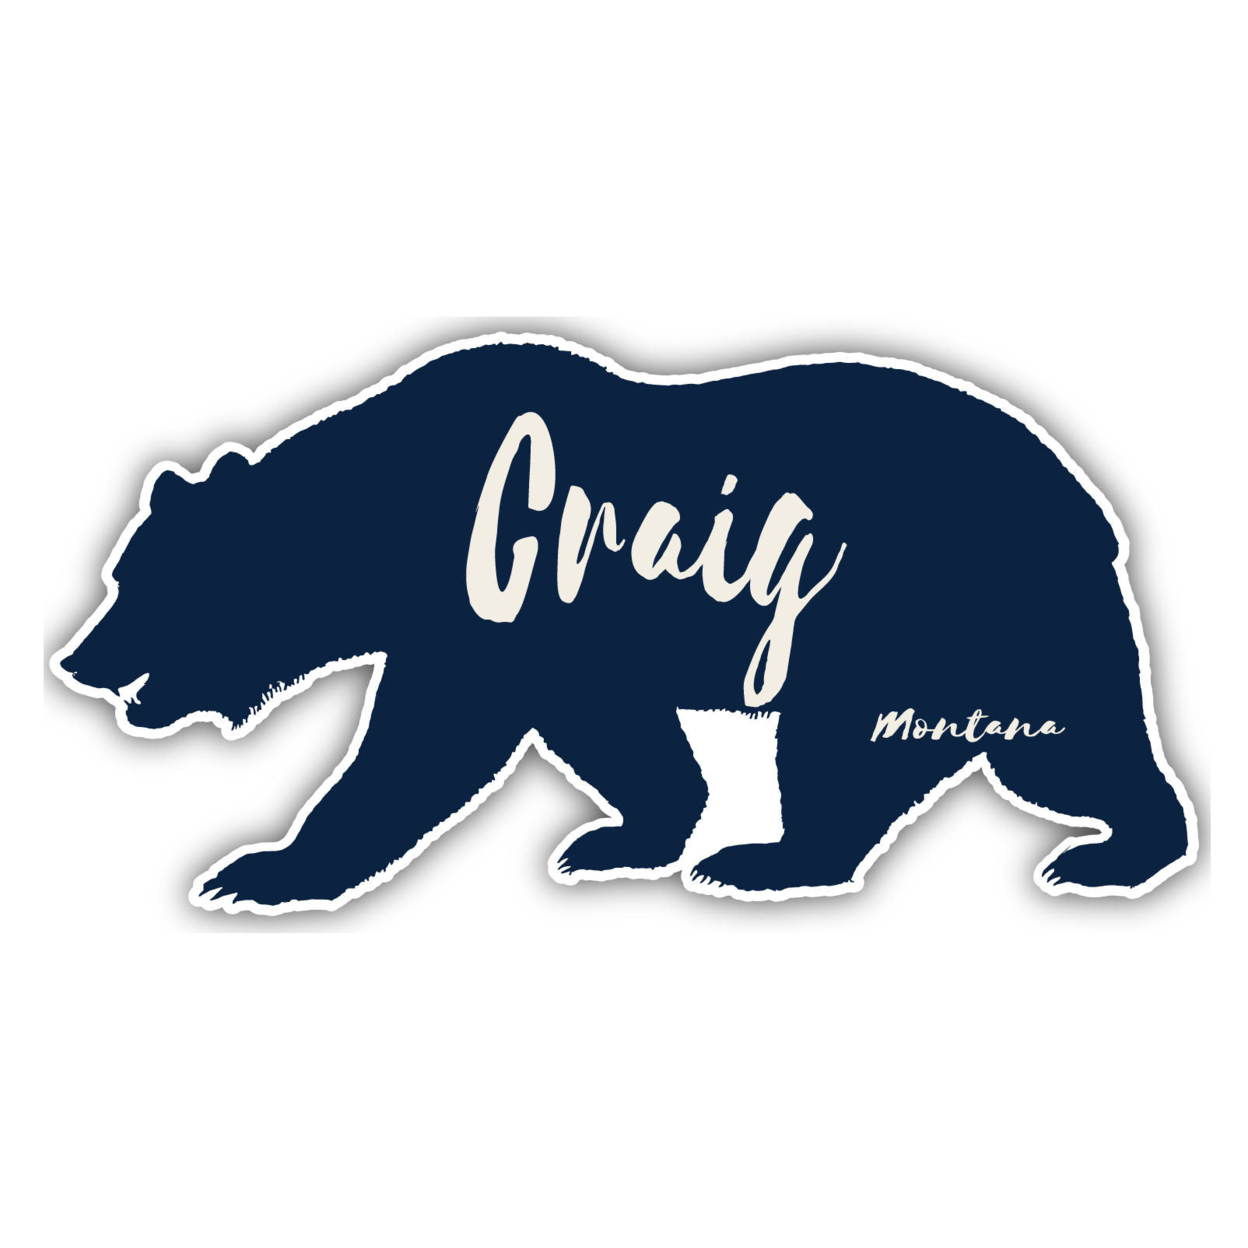 Craig Montana Souvenir Decorative Stickers (Choose Theme And Size) - Single Unit, 2-Inch, Bear